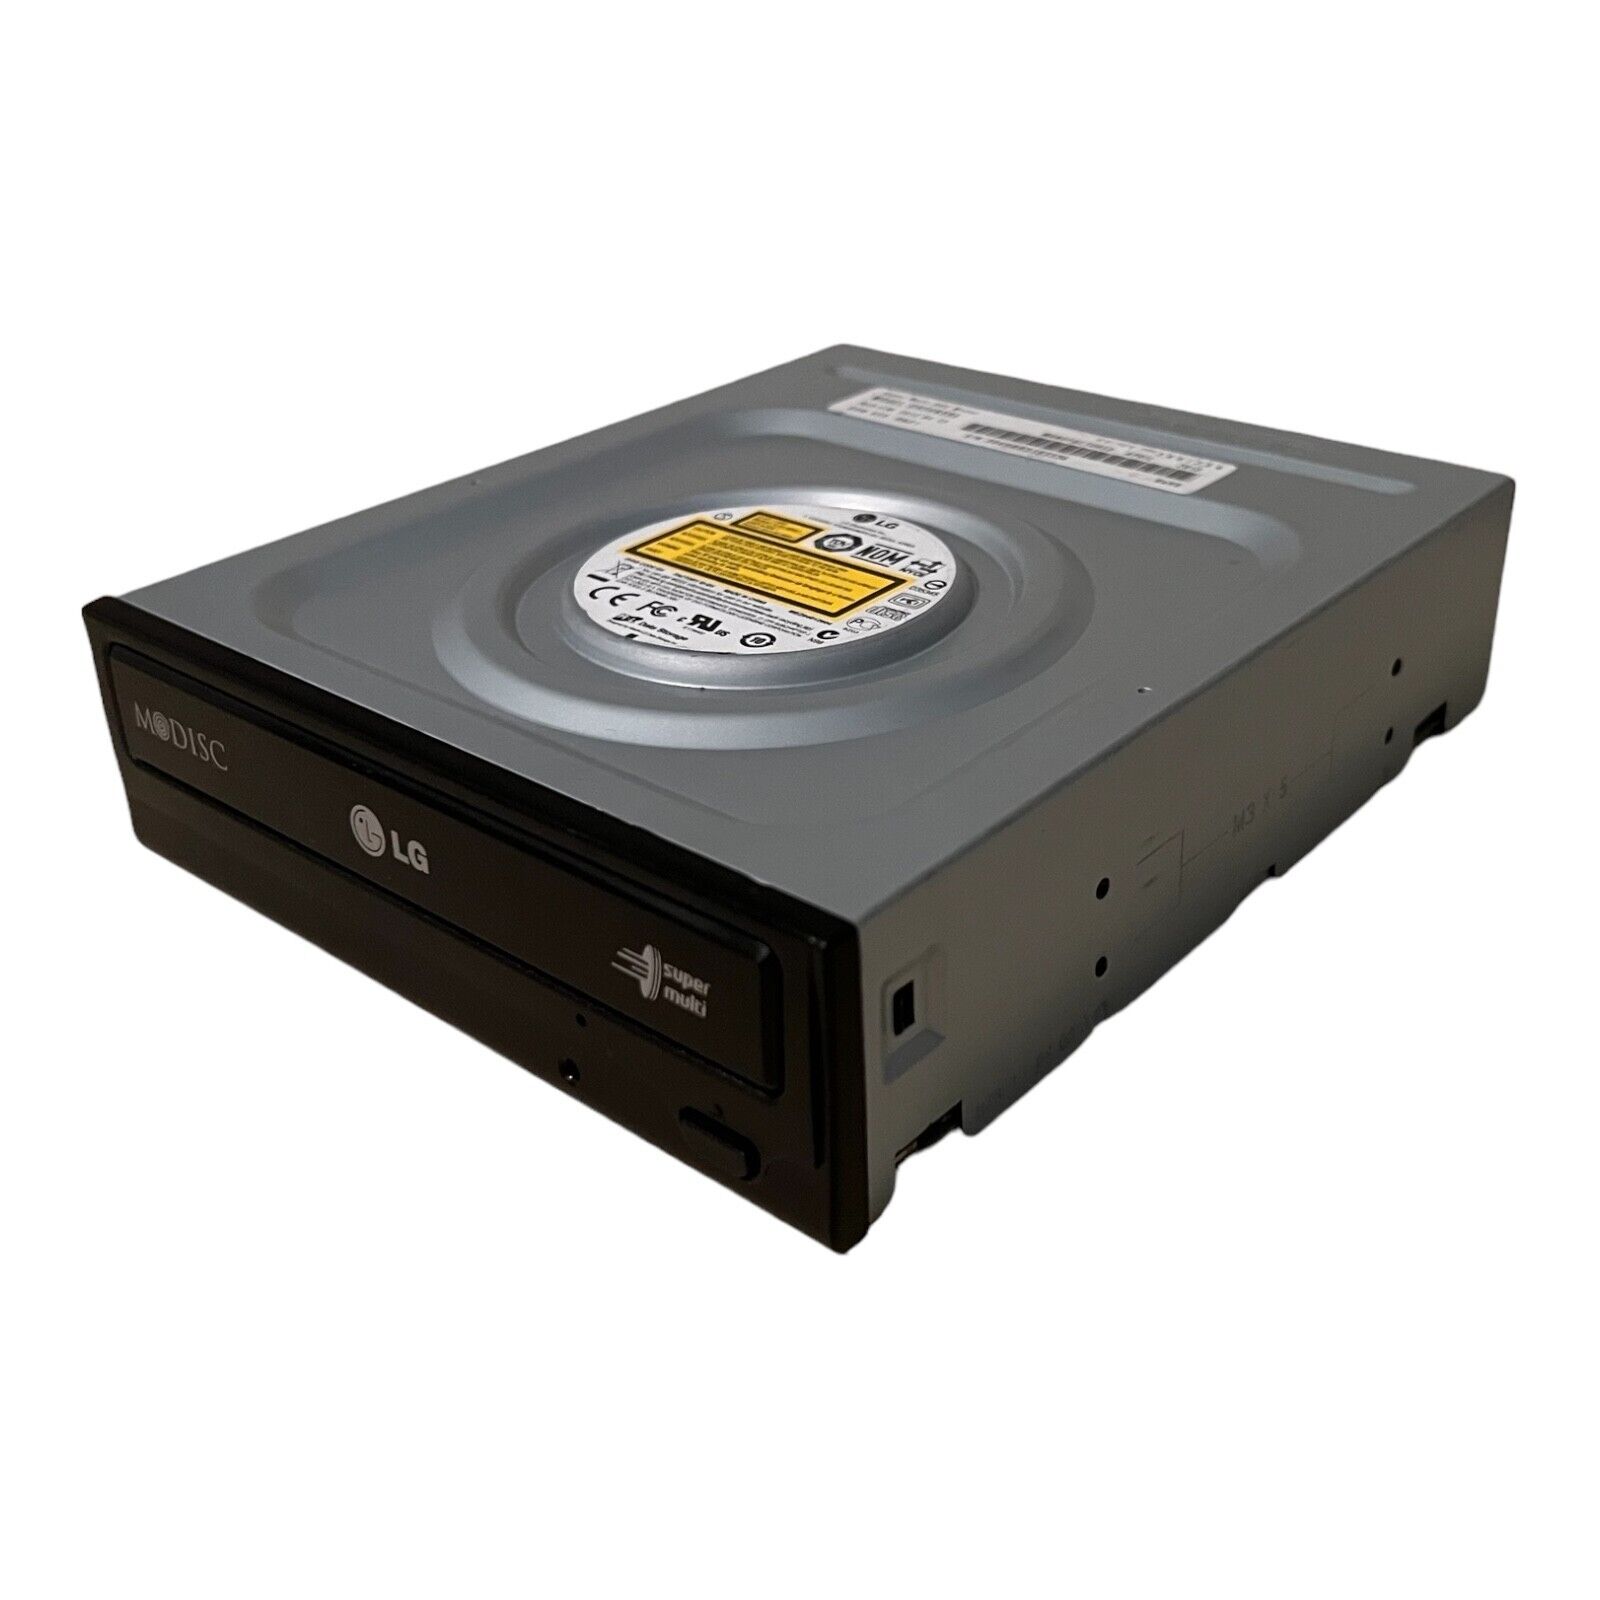 LG GH24NS95 SATA 24X Super-Multi Internal DVD+RW DVD Writer Burner Drive